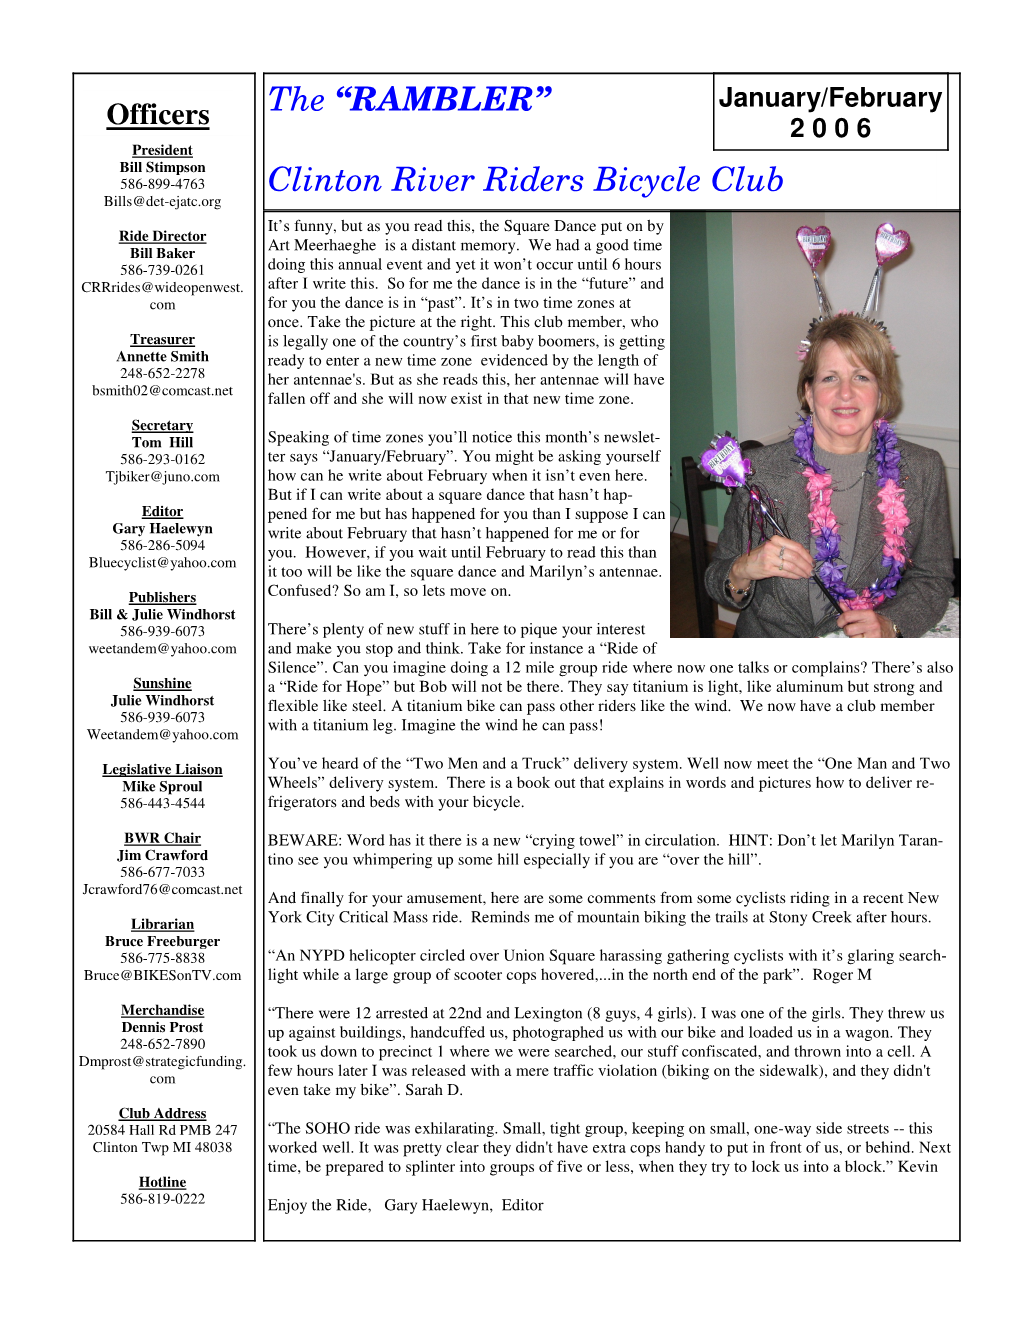 The “RAMBLER” Clinton River Riders Bicycle Club